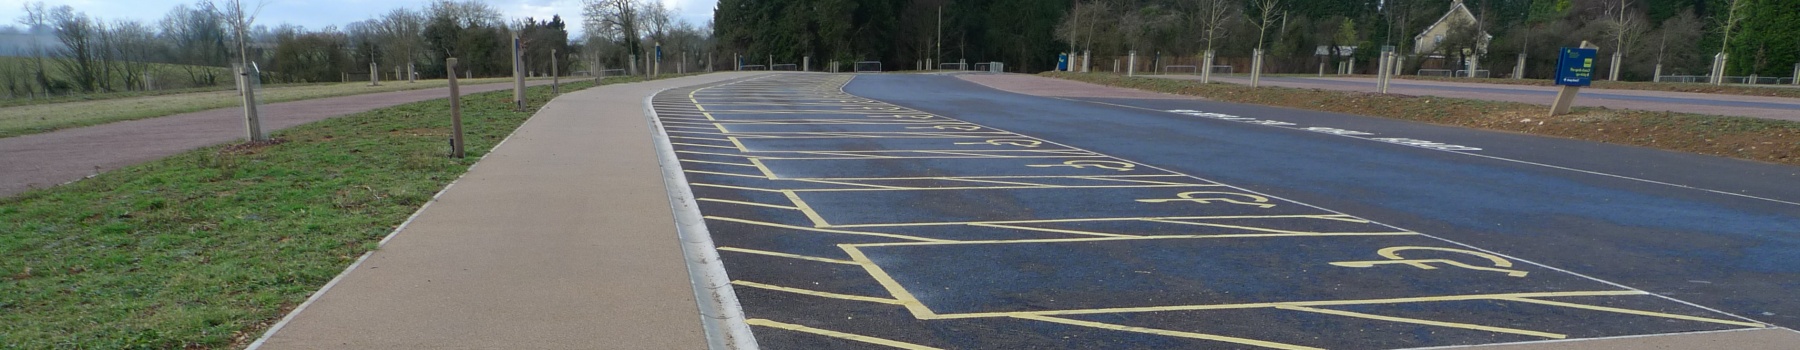 disabled parking bay marking